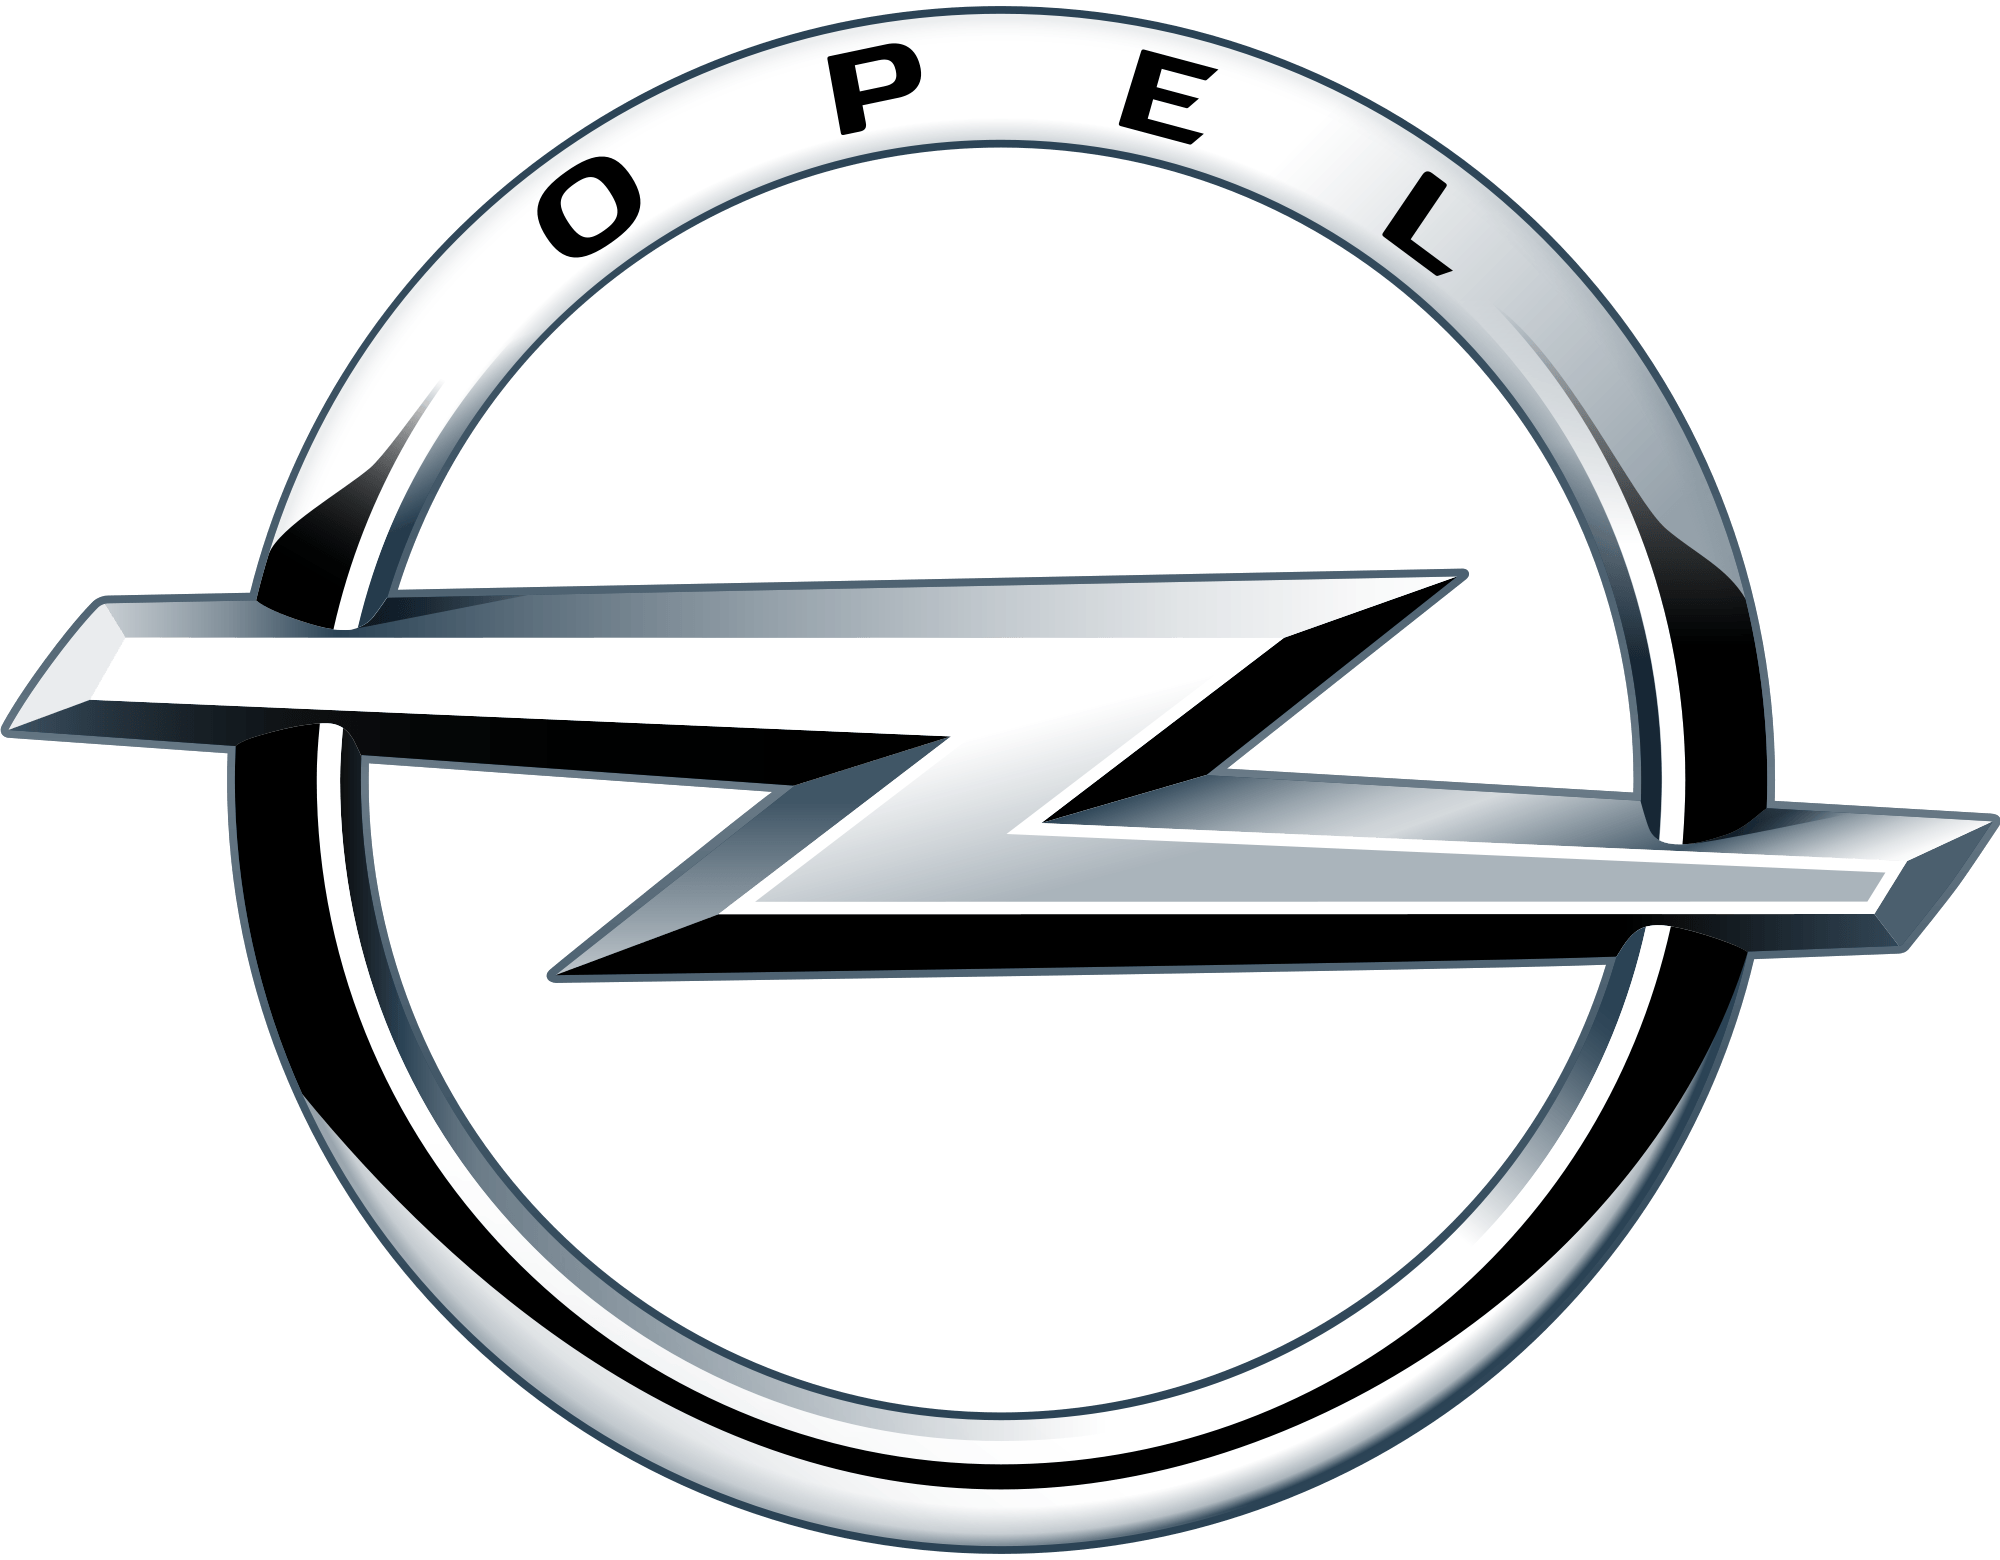 German Luxury Car Manufacturers Logo - German Car Brands, Companies and Manufacturers | Car Brand Names.com